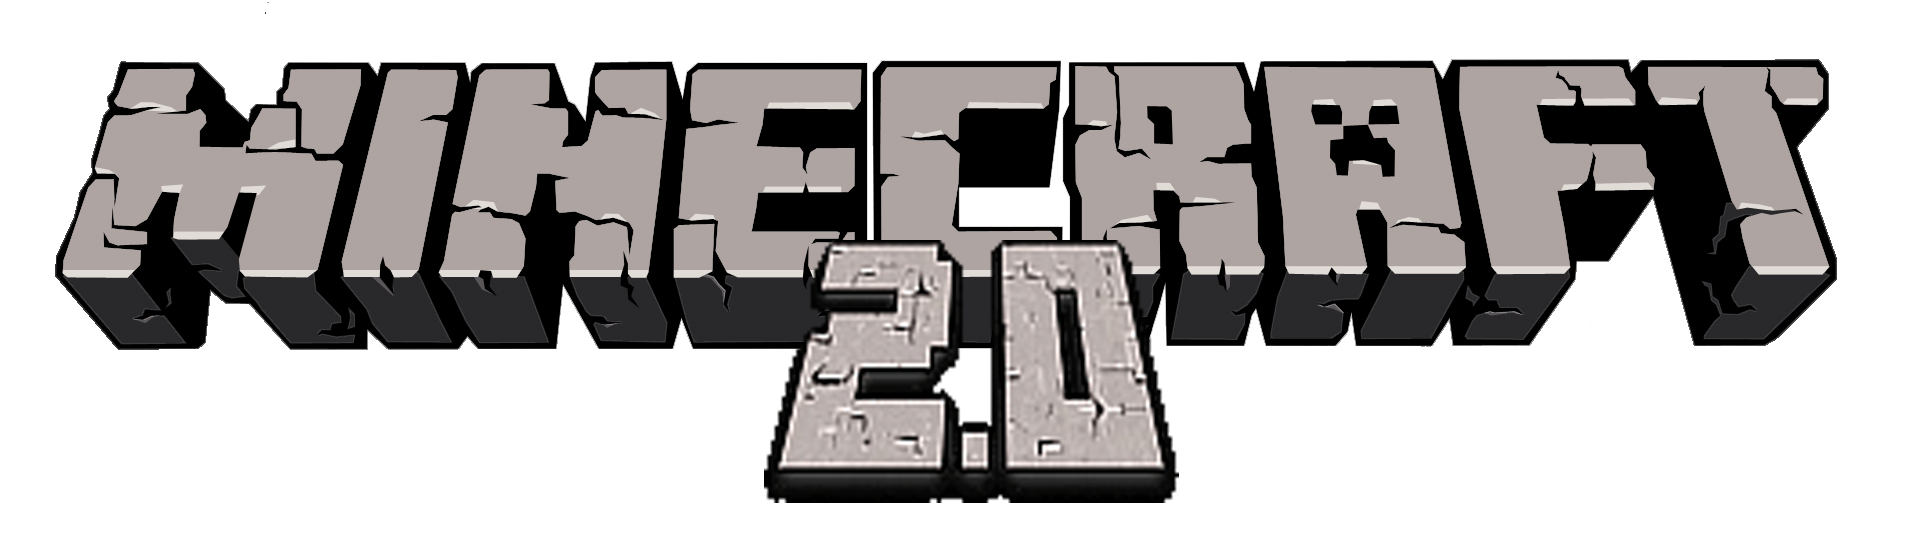 Minecraft 2.0 - The Supermassive Update, Fantendo - Game Ideas & More